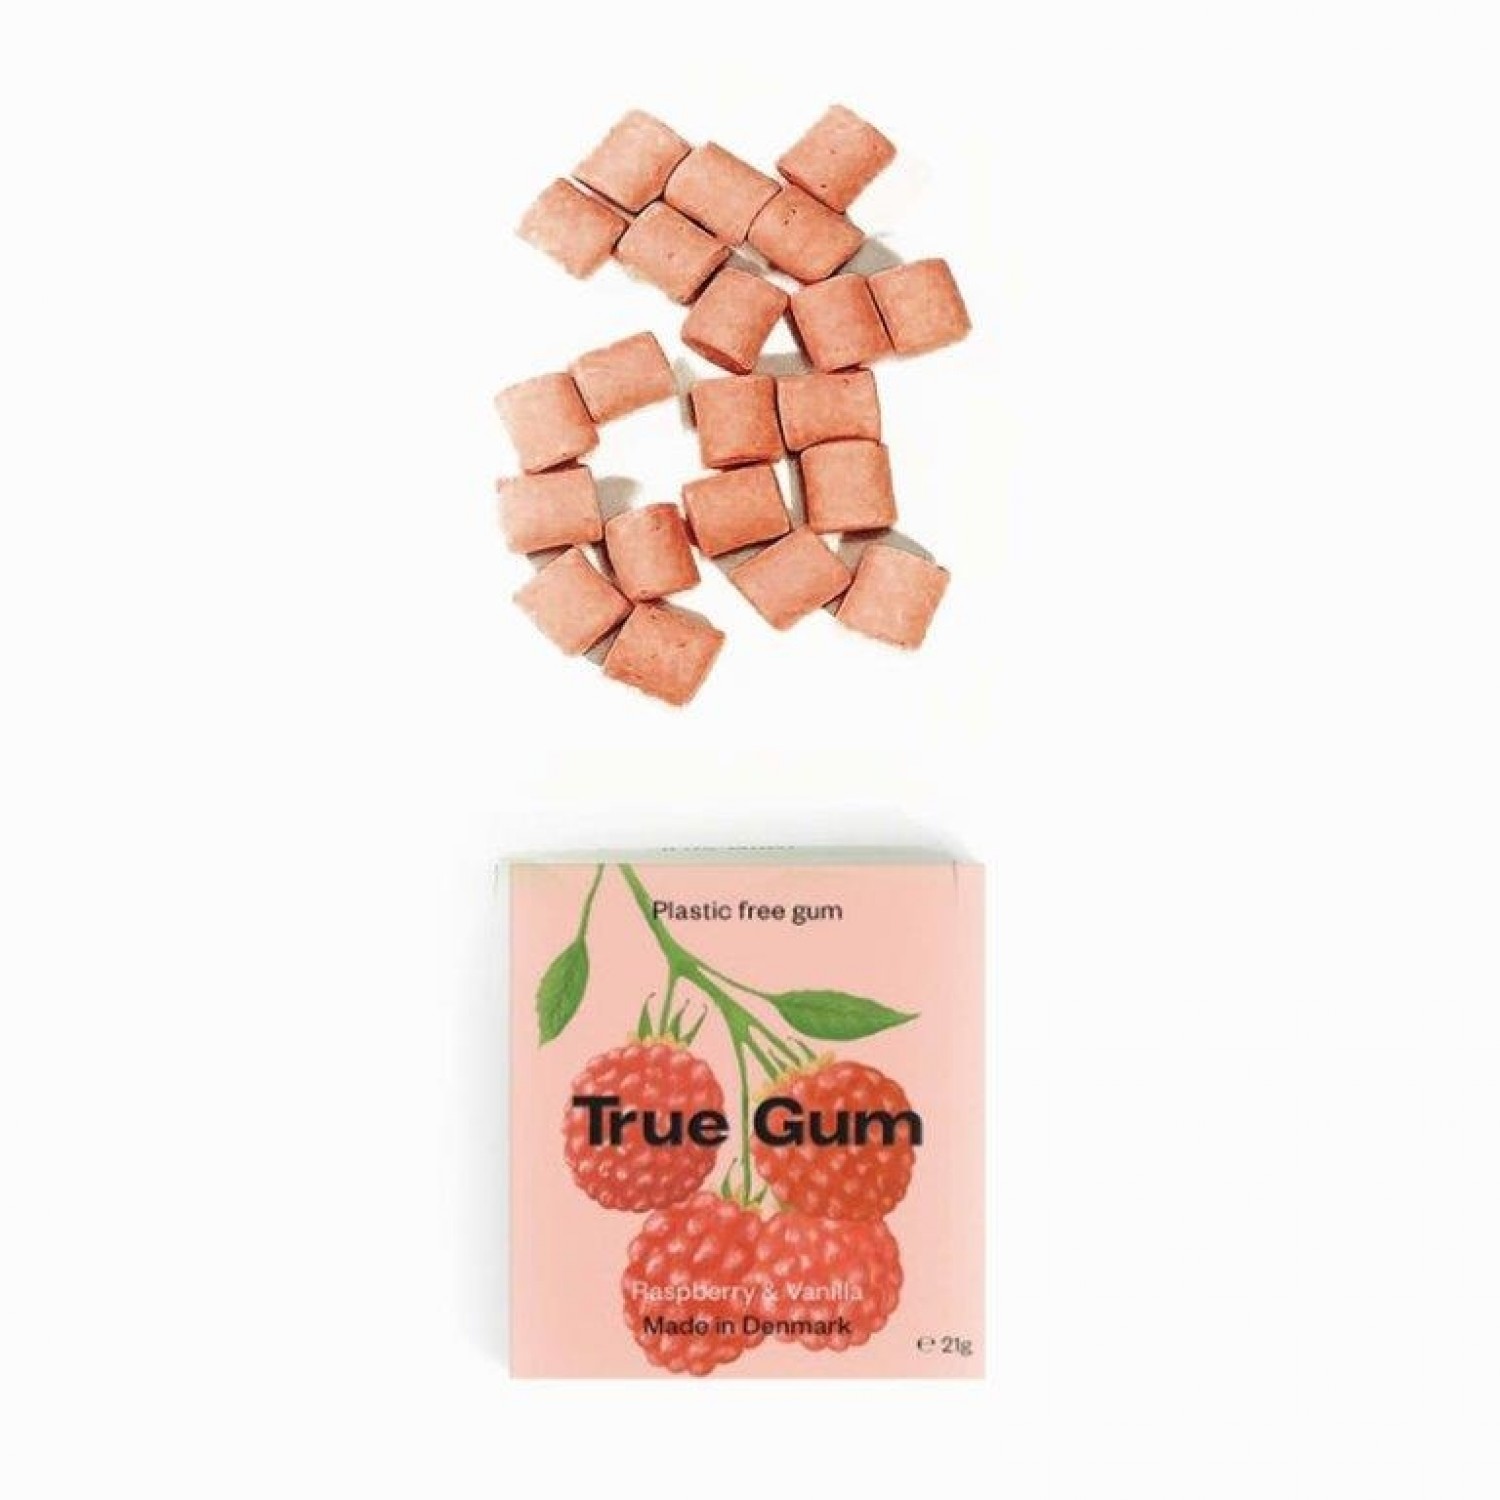 True Gum Sweet Raspberry & Vanilla plastic-free chewing gum